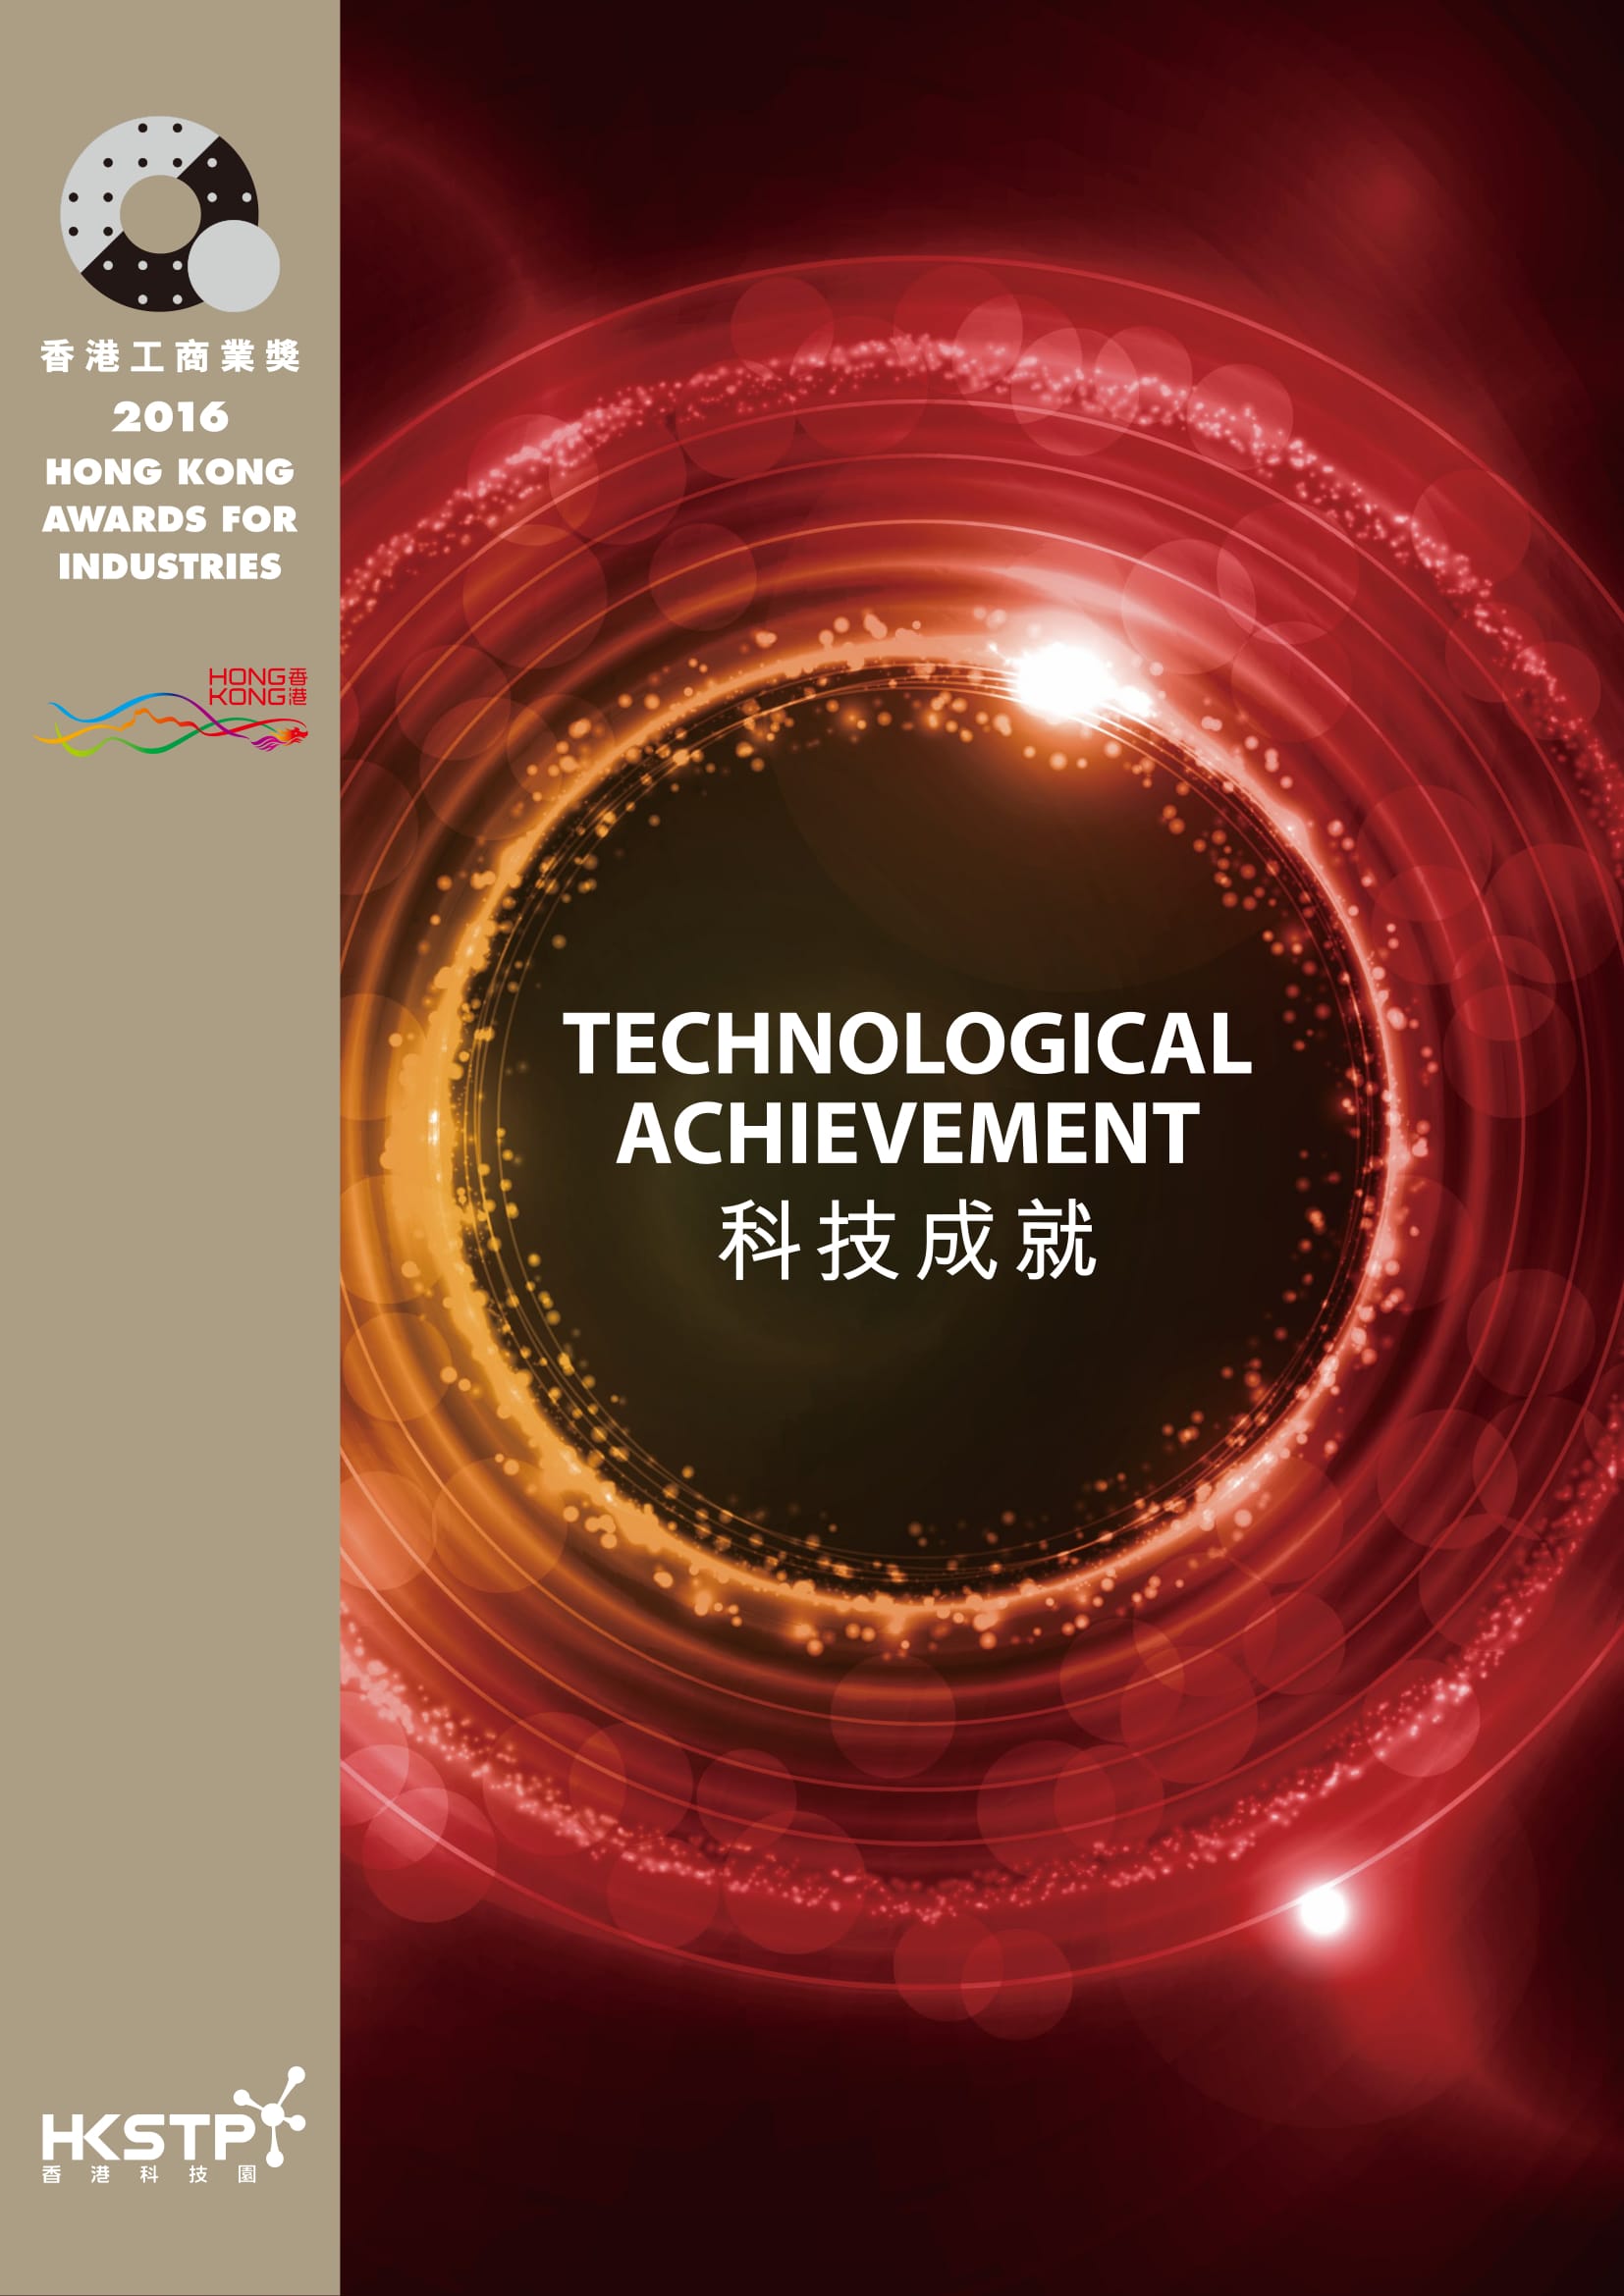 2016 Winning Brochure of the Technological Achievement